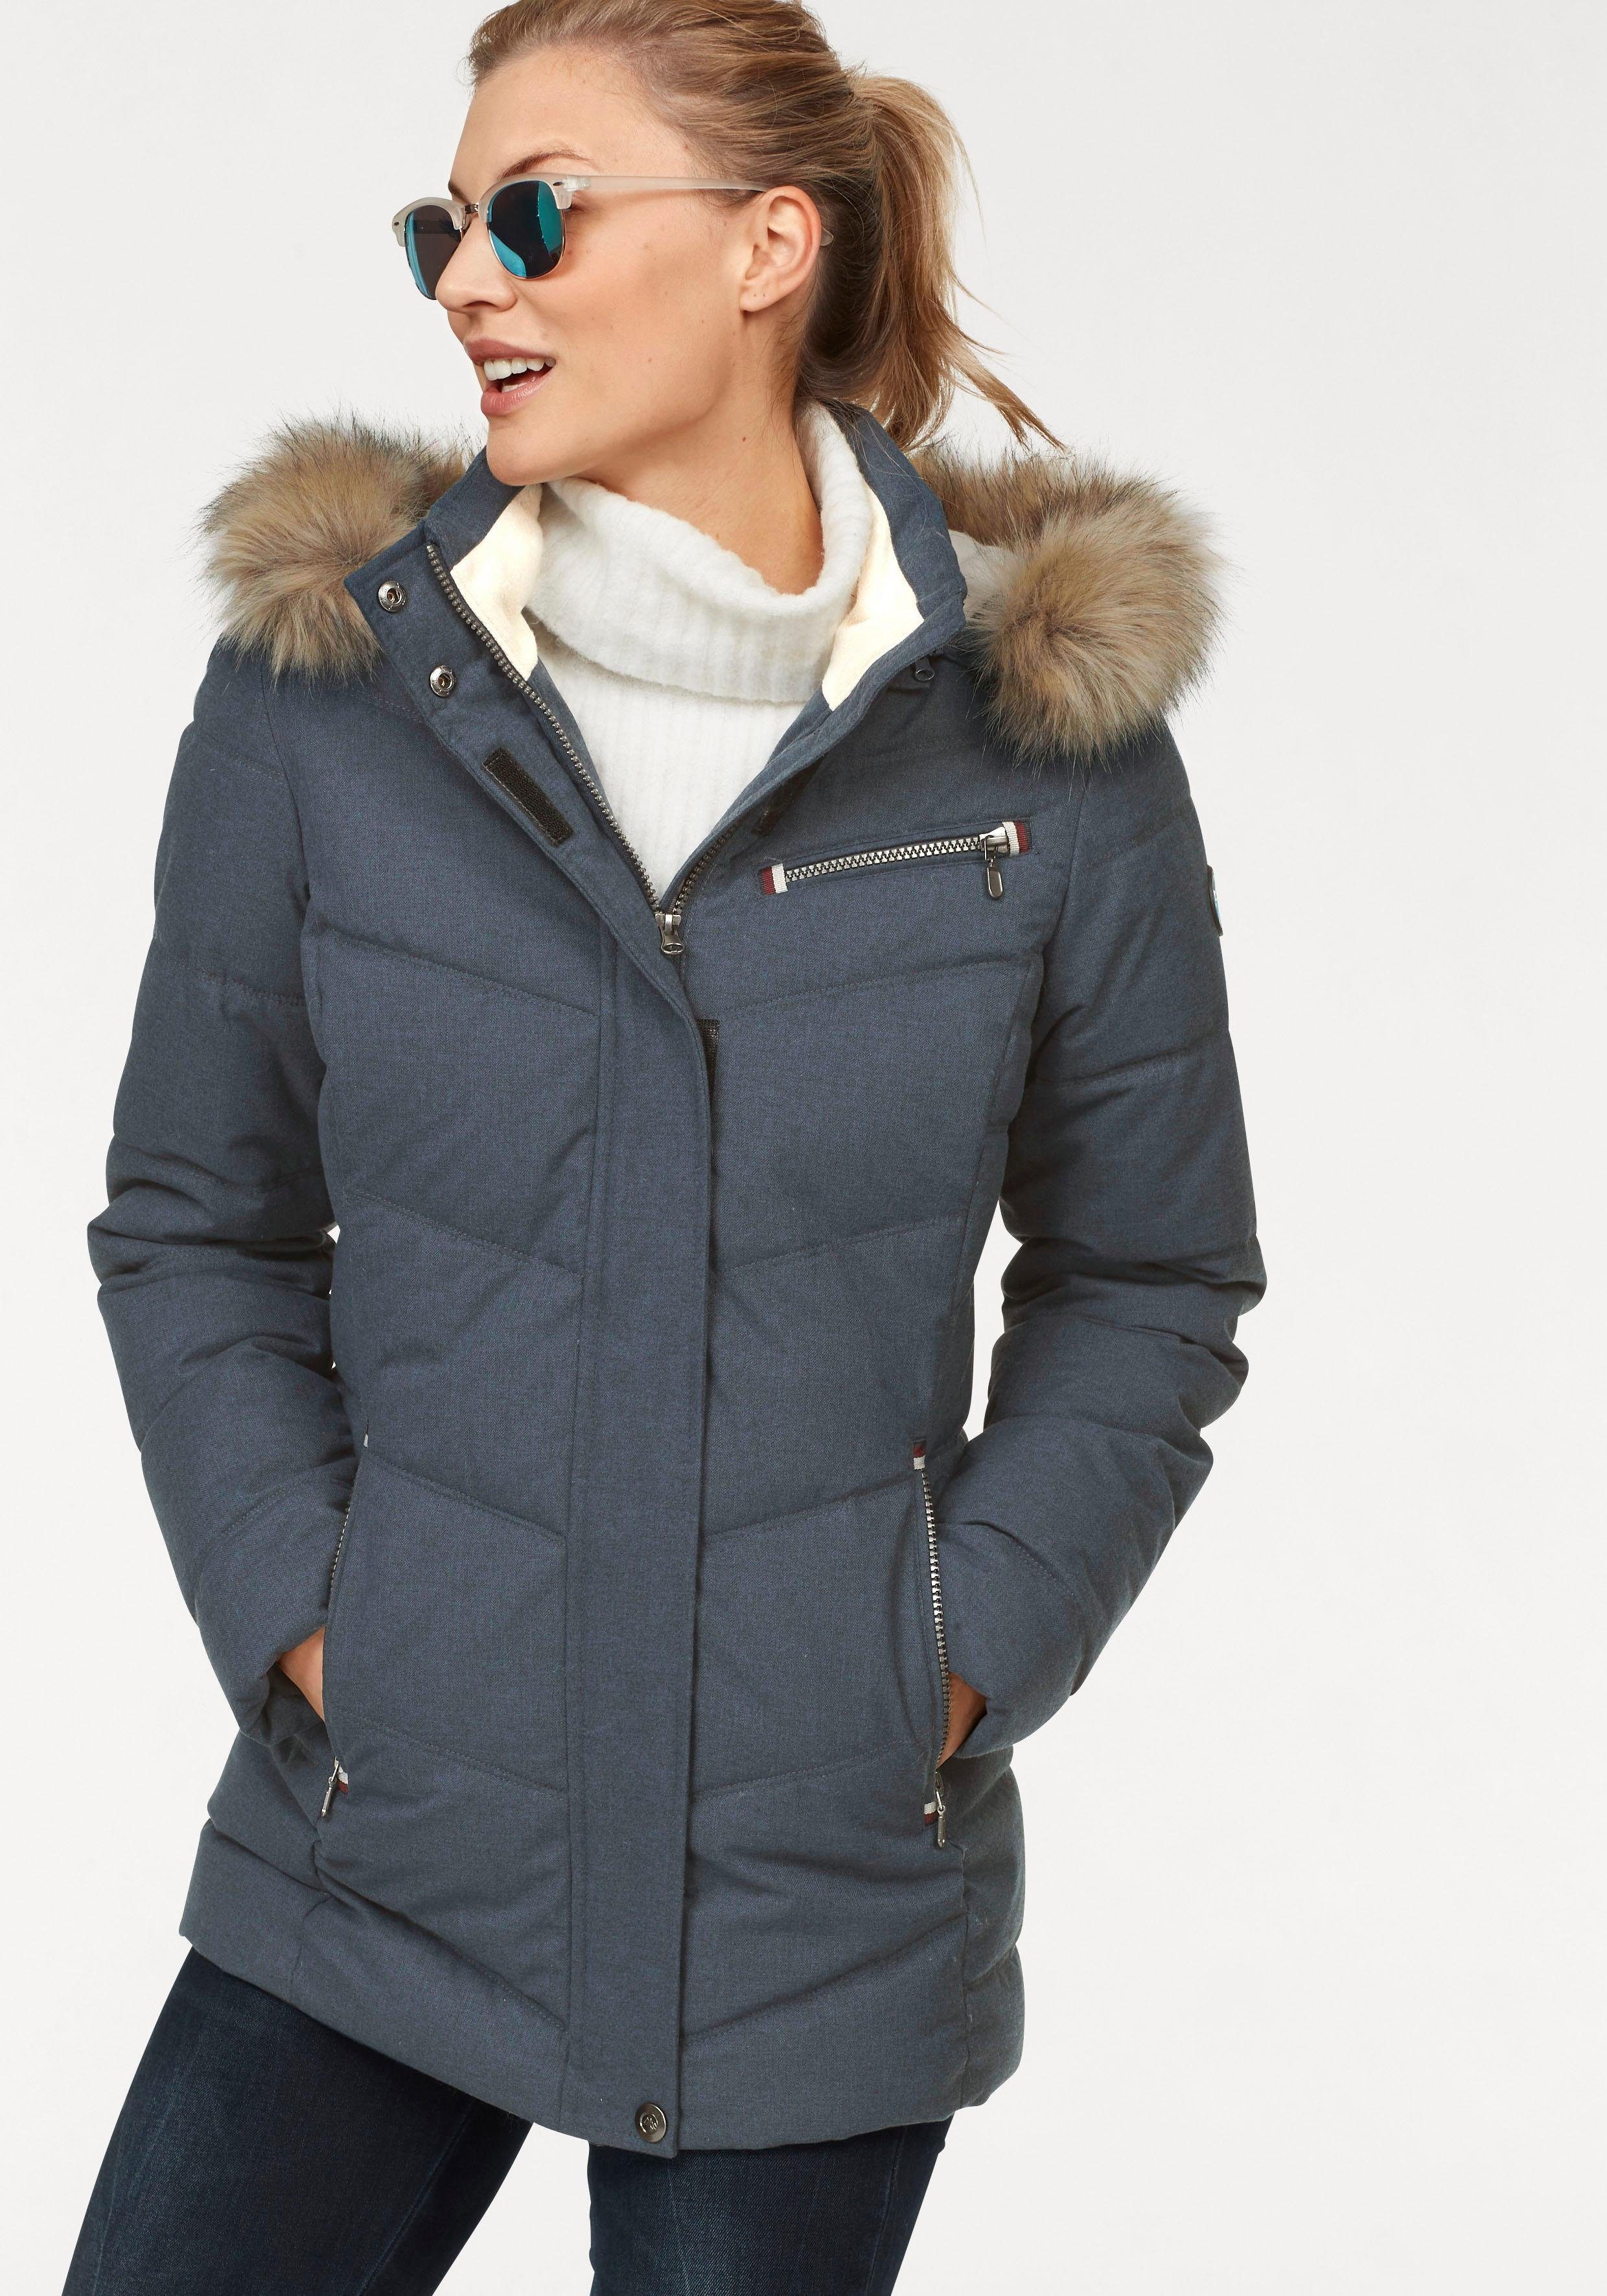 Polarino Jacken online kaufen | OTTO